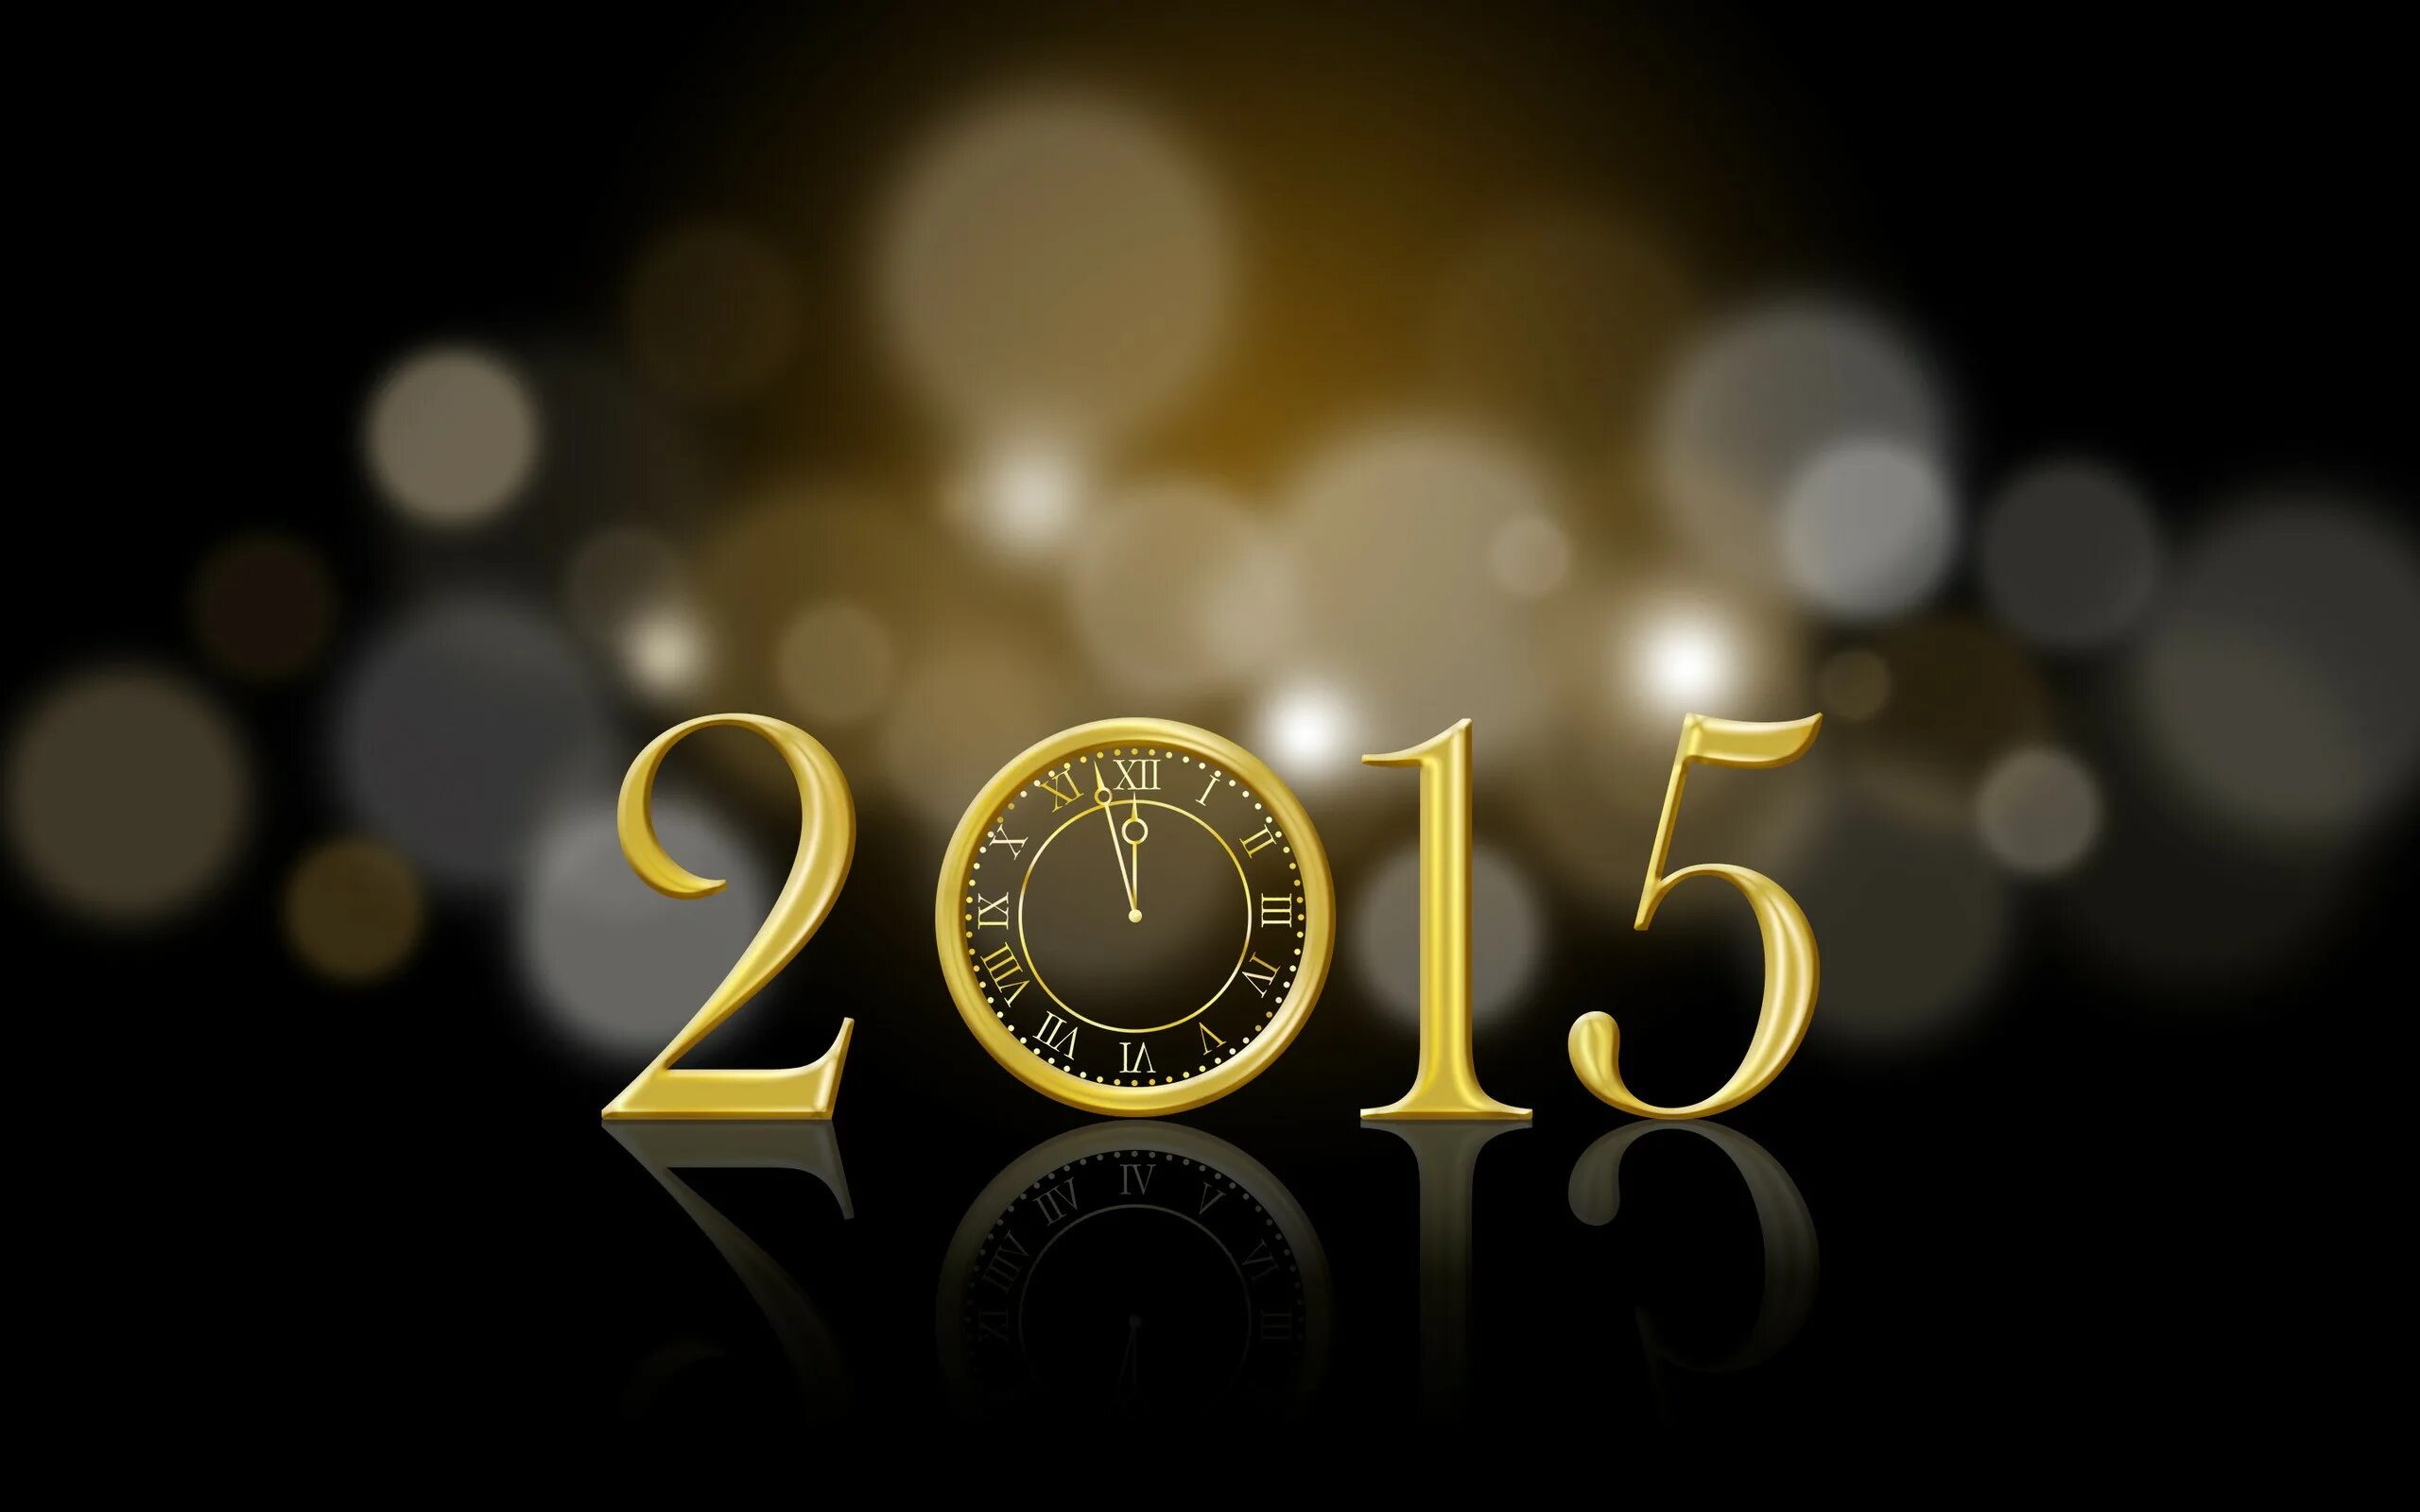 2014 год 2015 год тыс. 2015 Год. 2015 Год картинки. Новый год. Картинки нового года 2015.